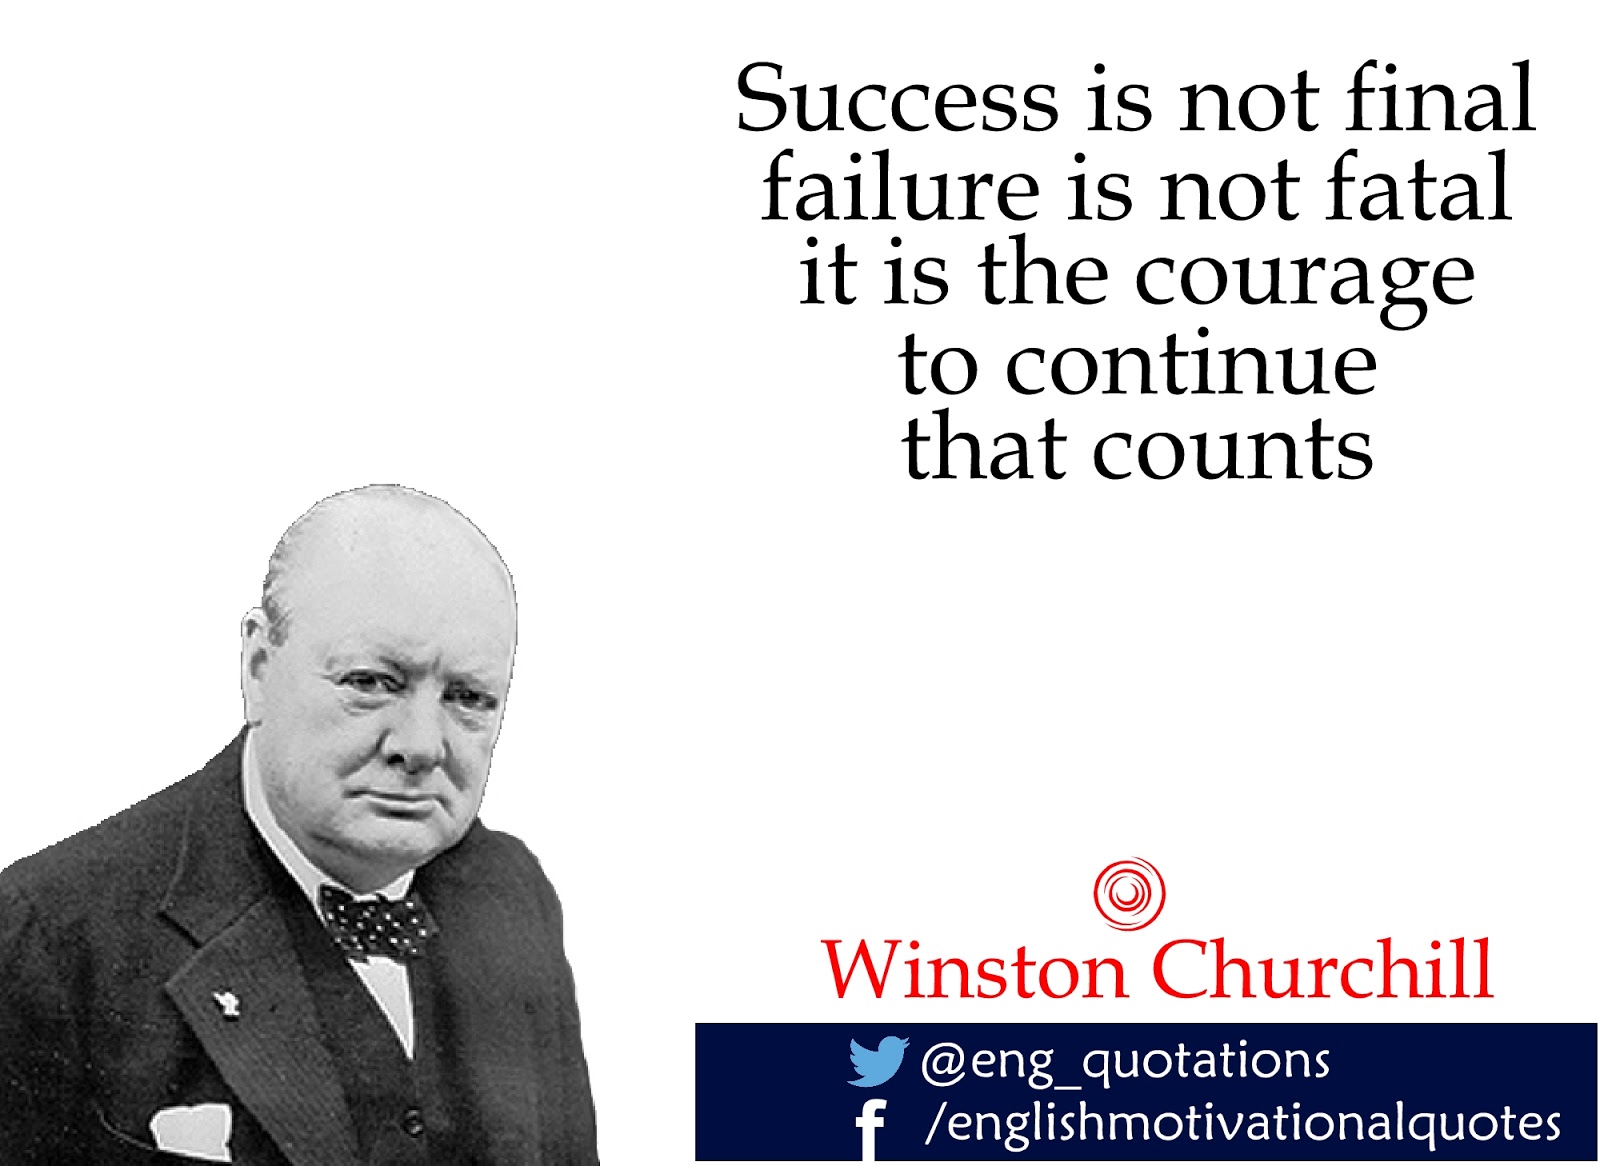 English Motivational Quotes English Motivational Quotes Winston